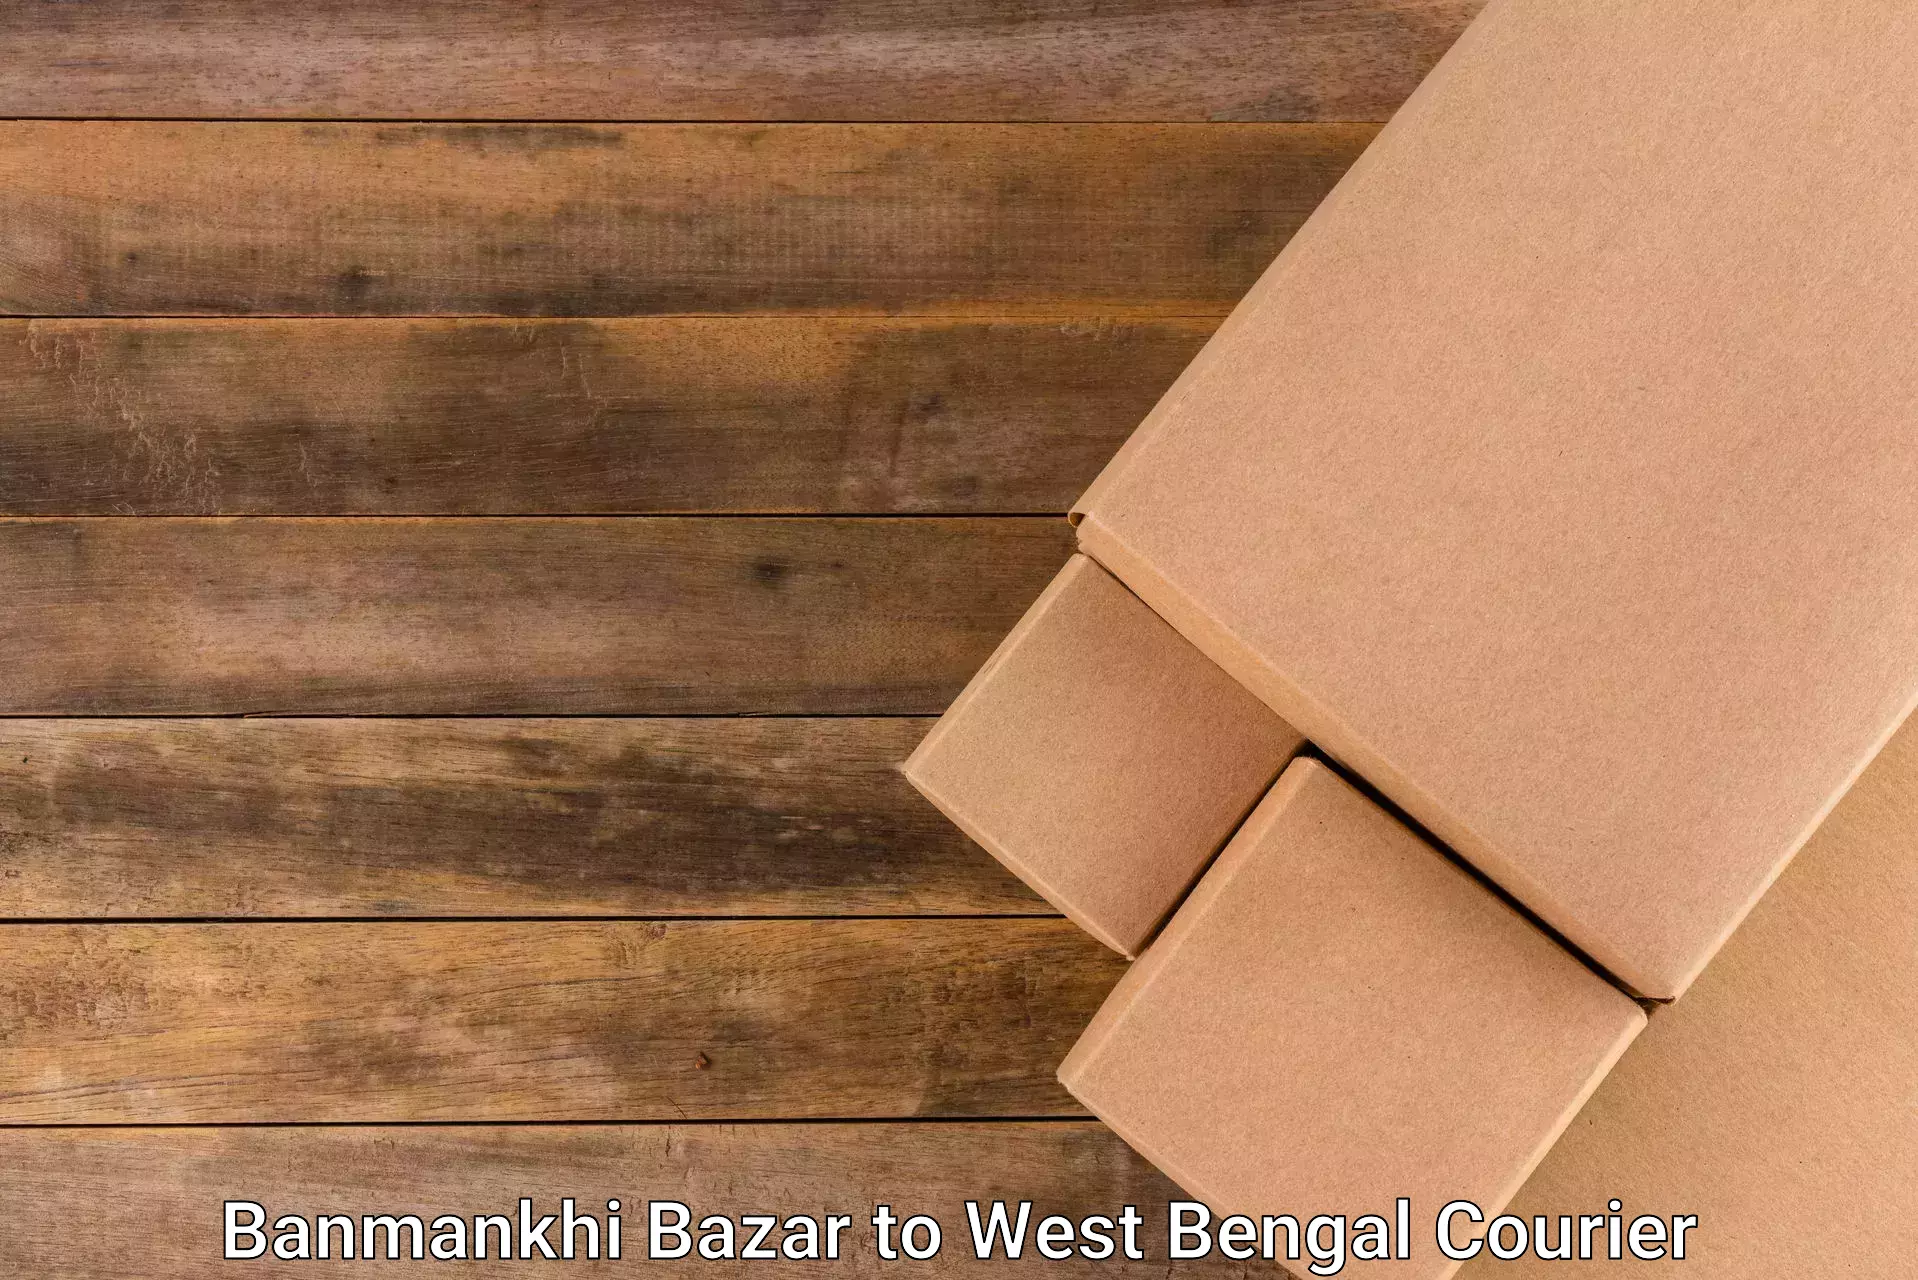 Efficient order fulfillment Banmankhi Bazar to Birbhum